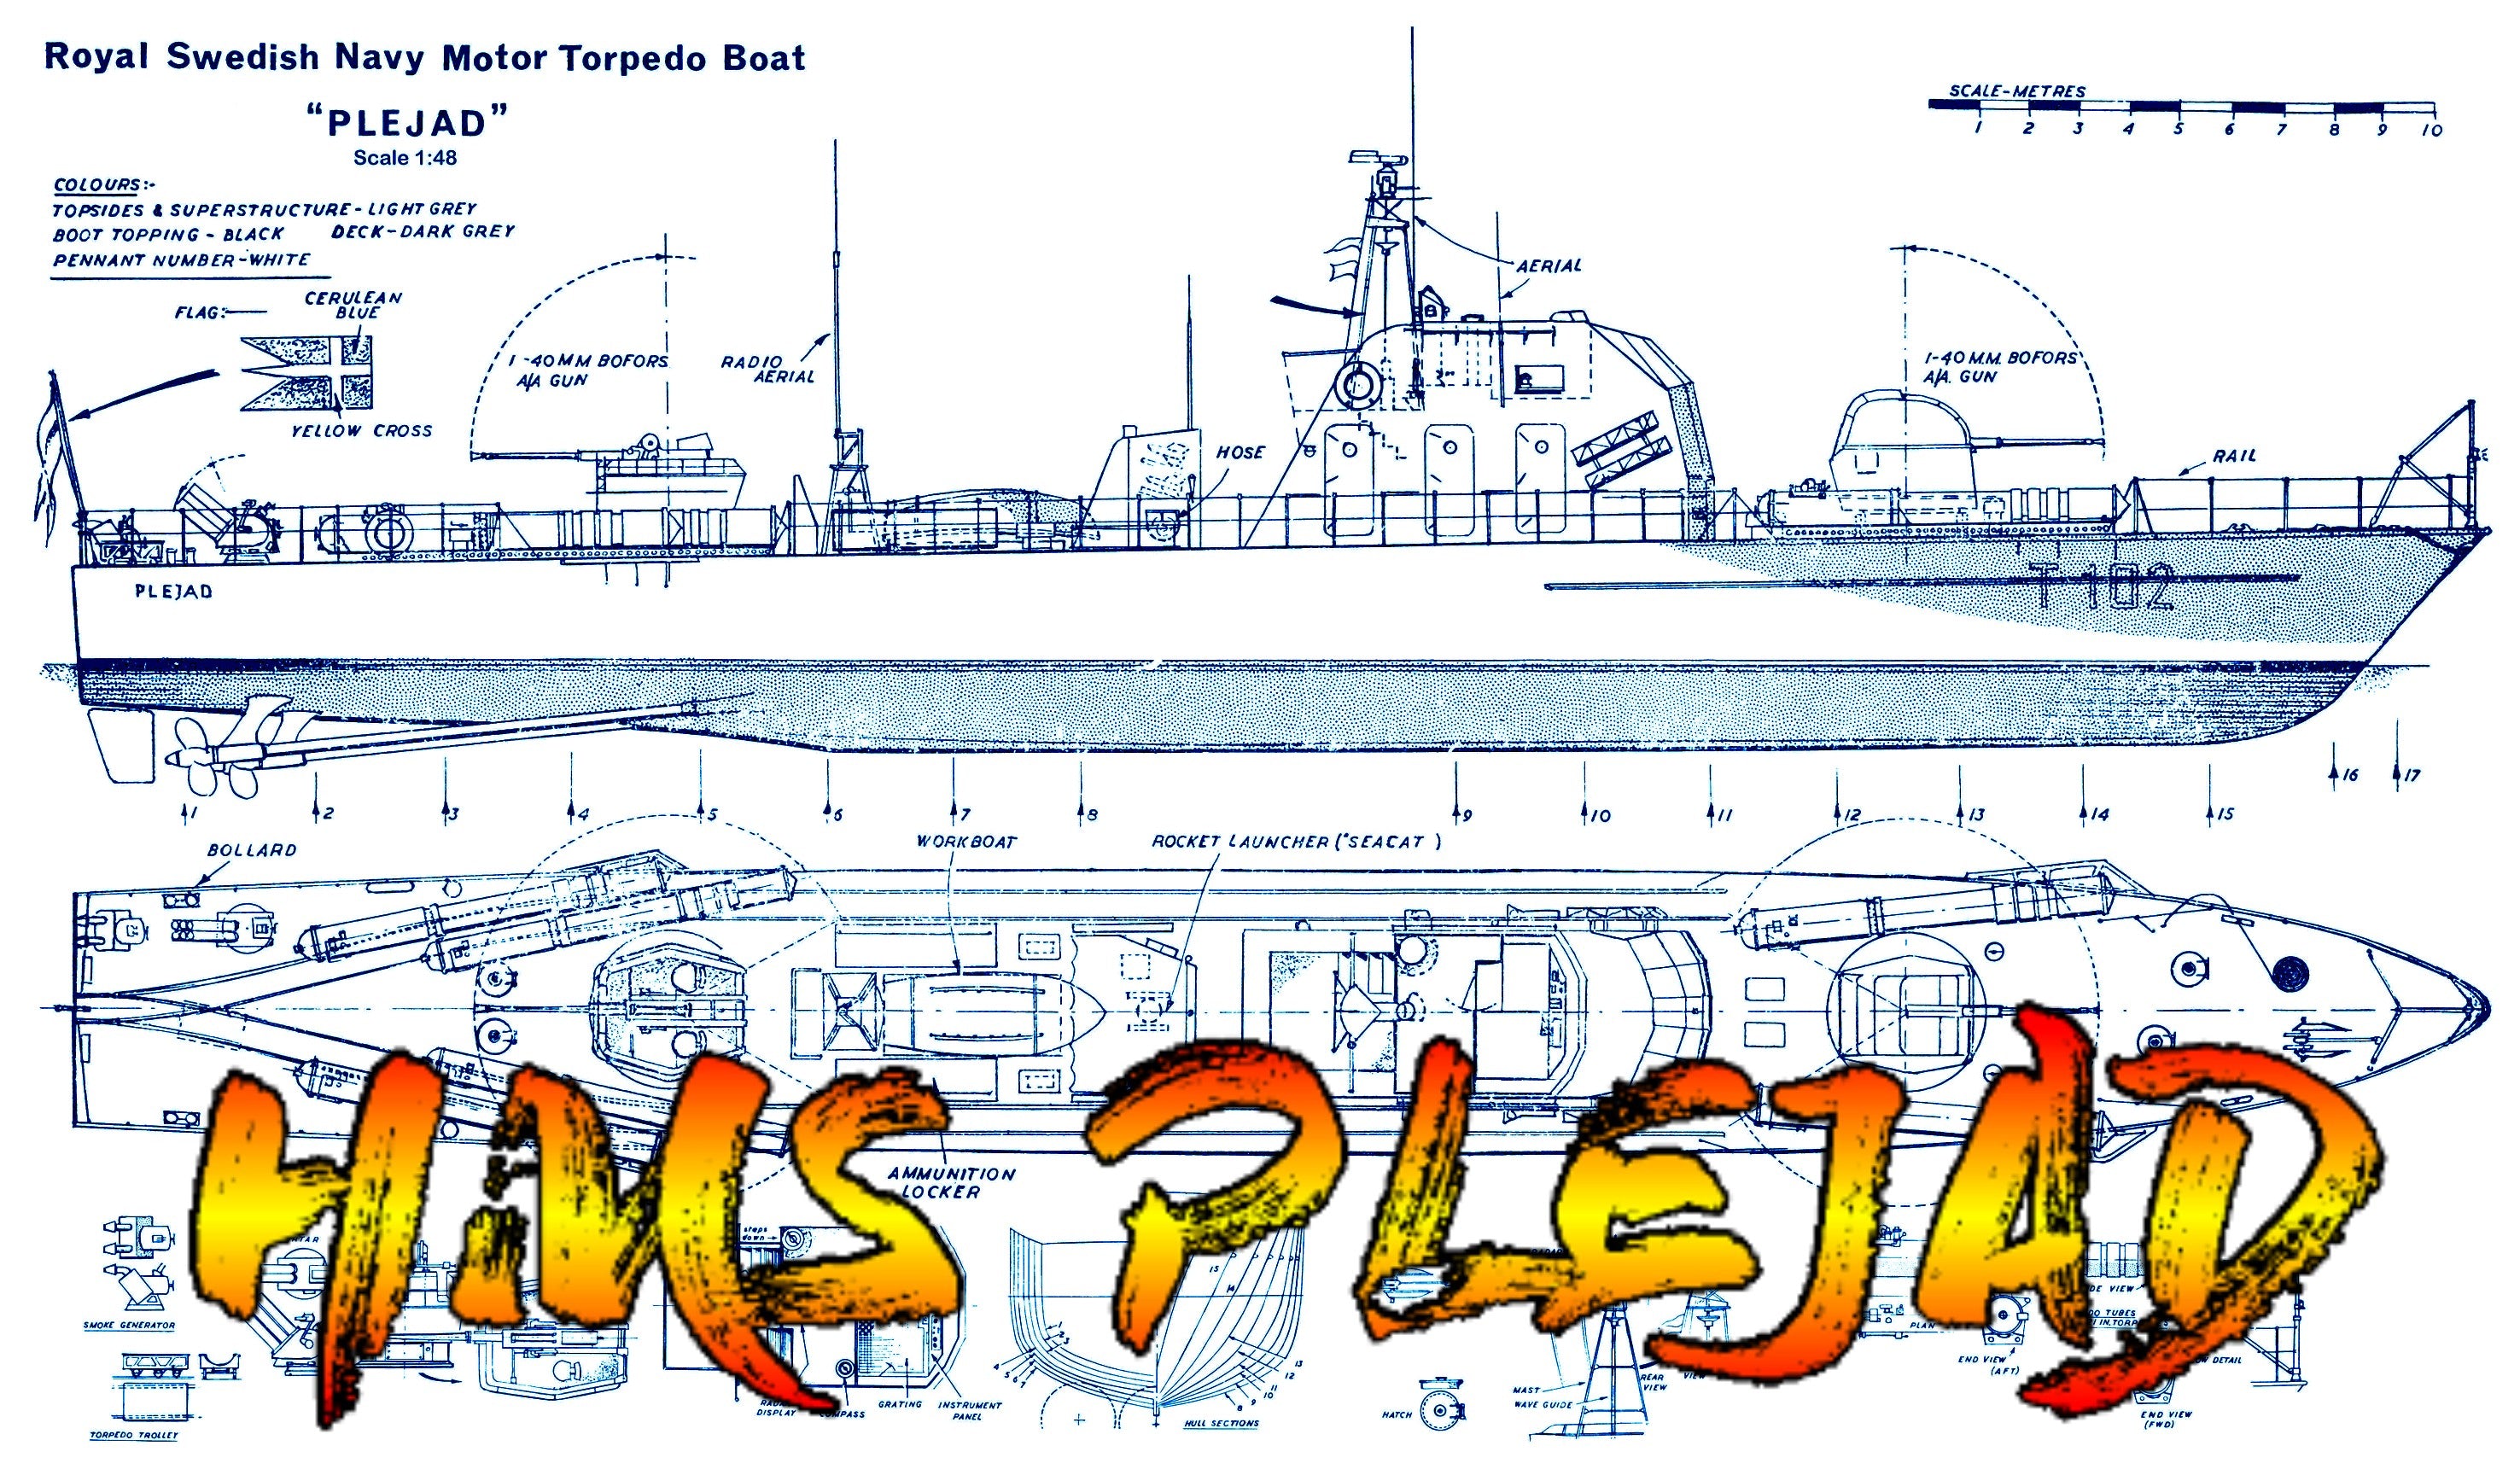 full size printed plan scale 1:48 swedish torpedo boat hms plejad suitable for radio control or display